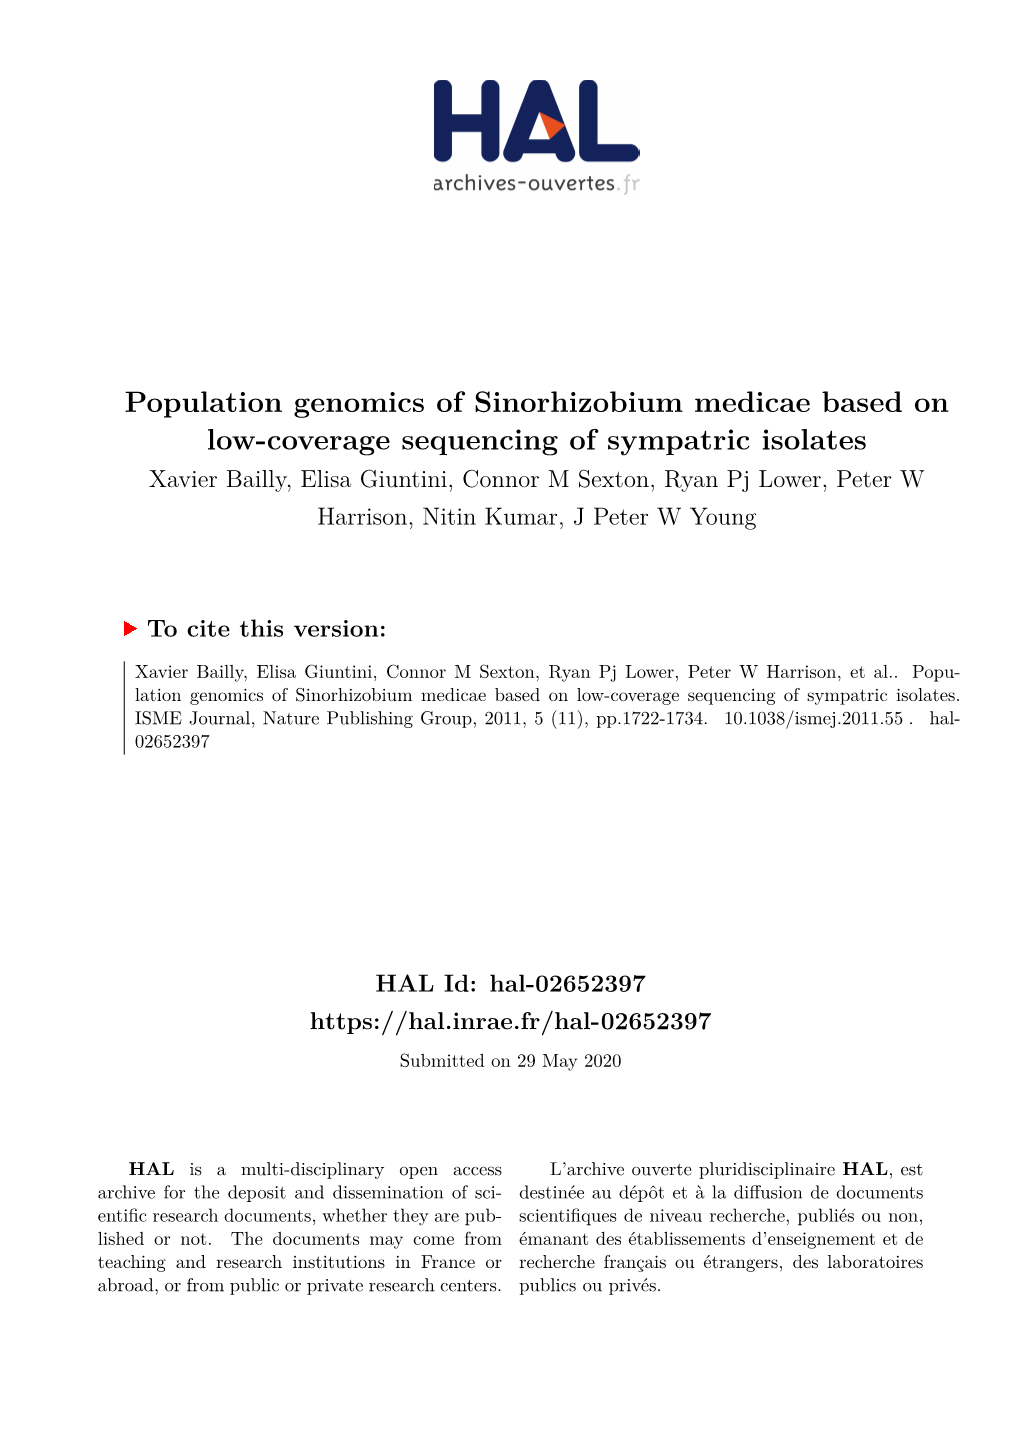 Population Genomics of Sinorhizobium Medicae Based On